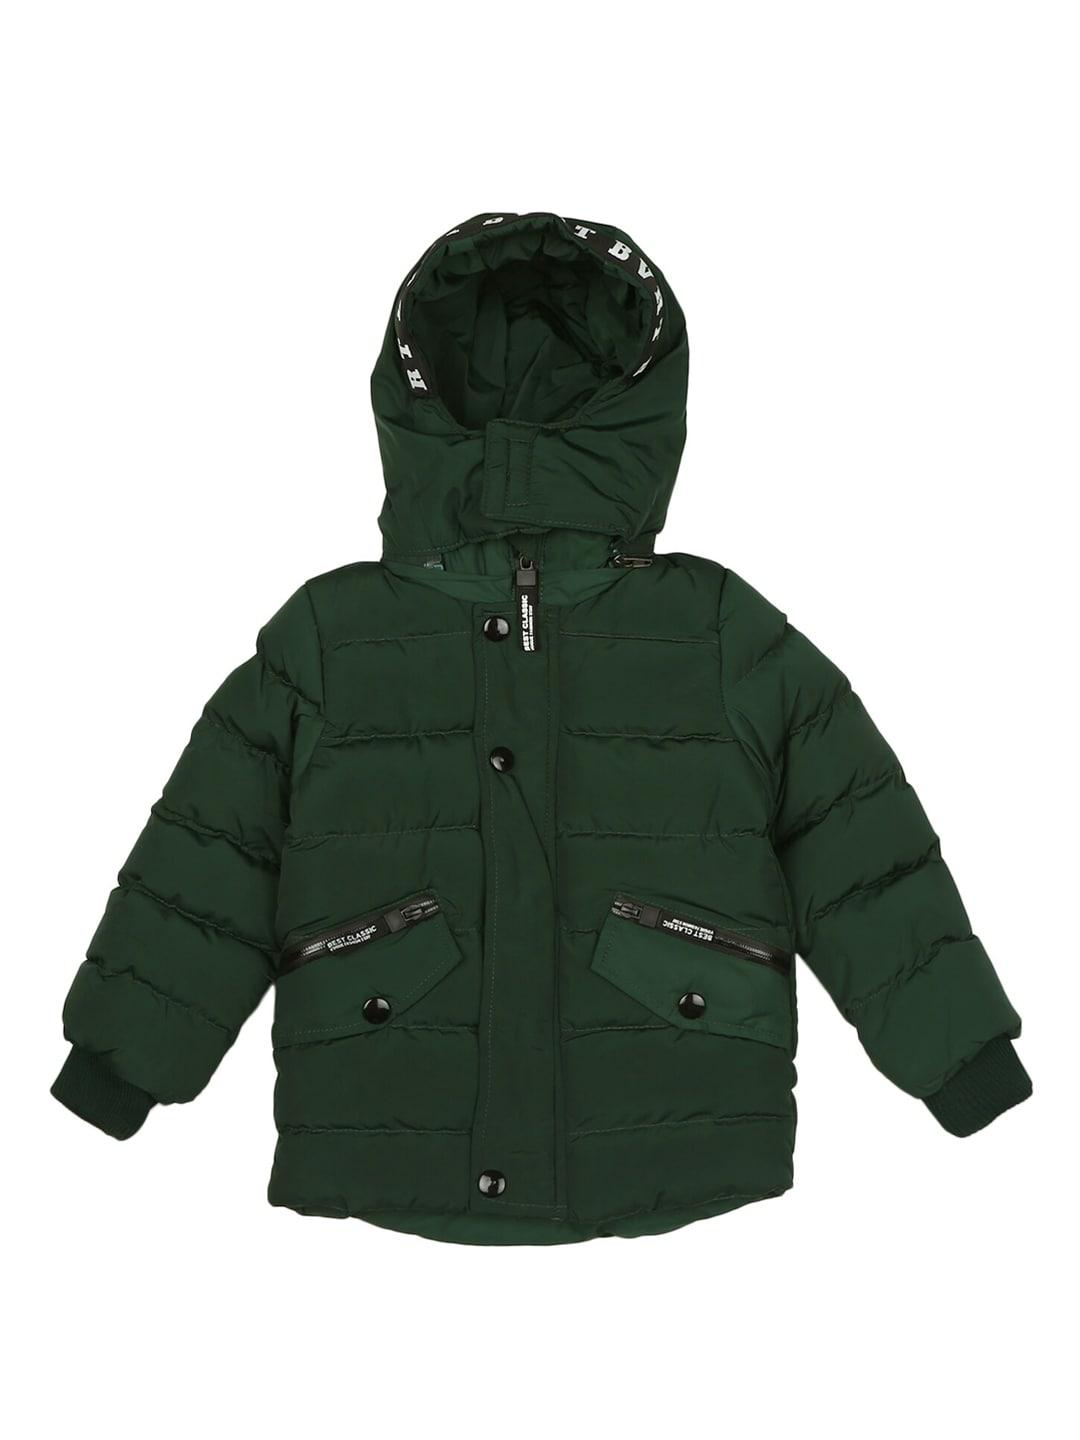 mothercare boys green longline parka jacket